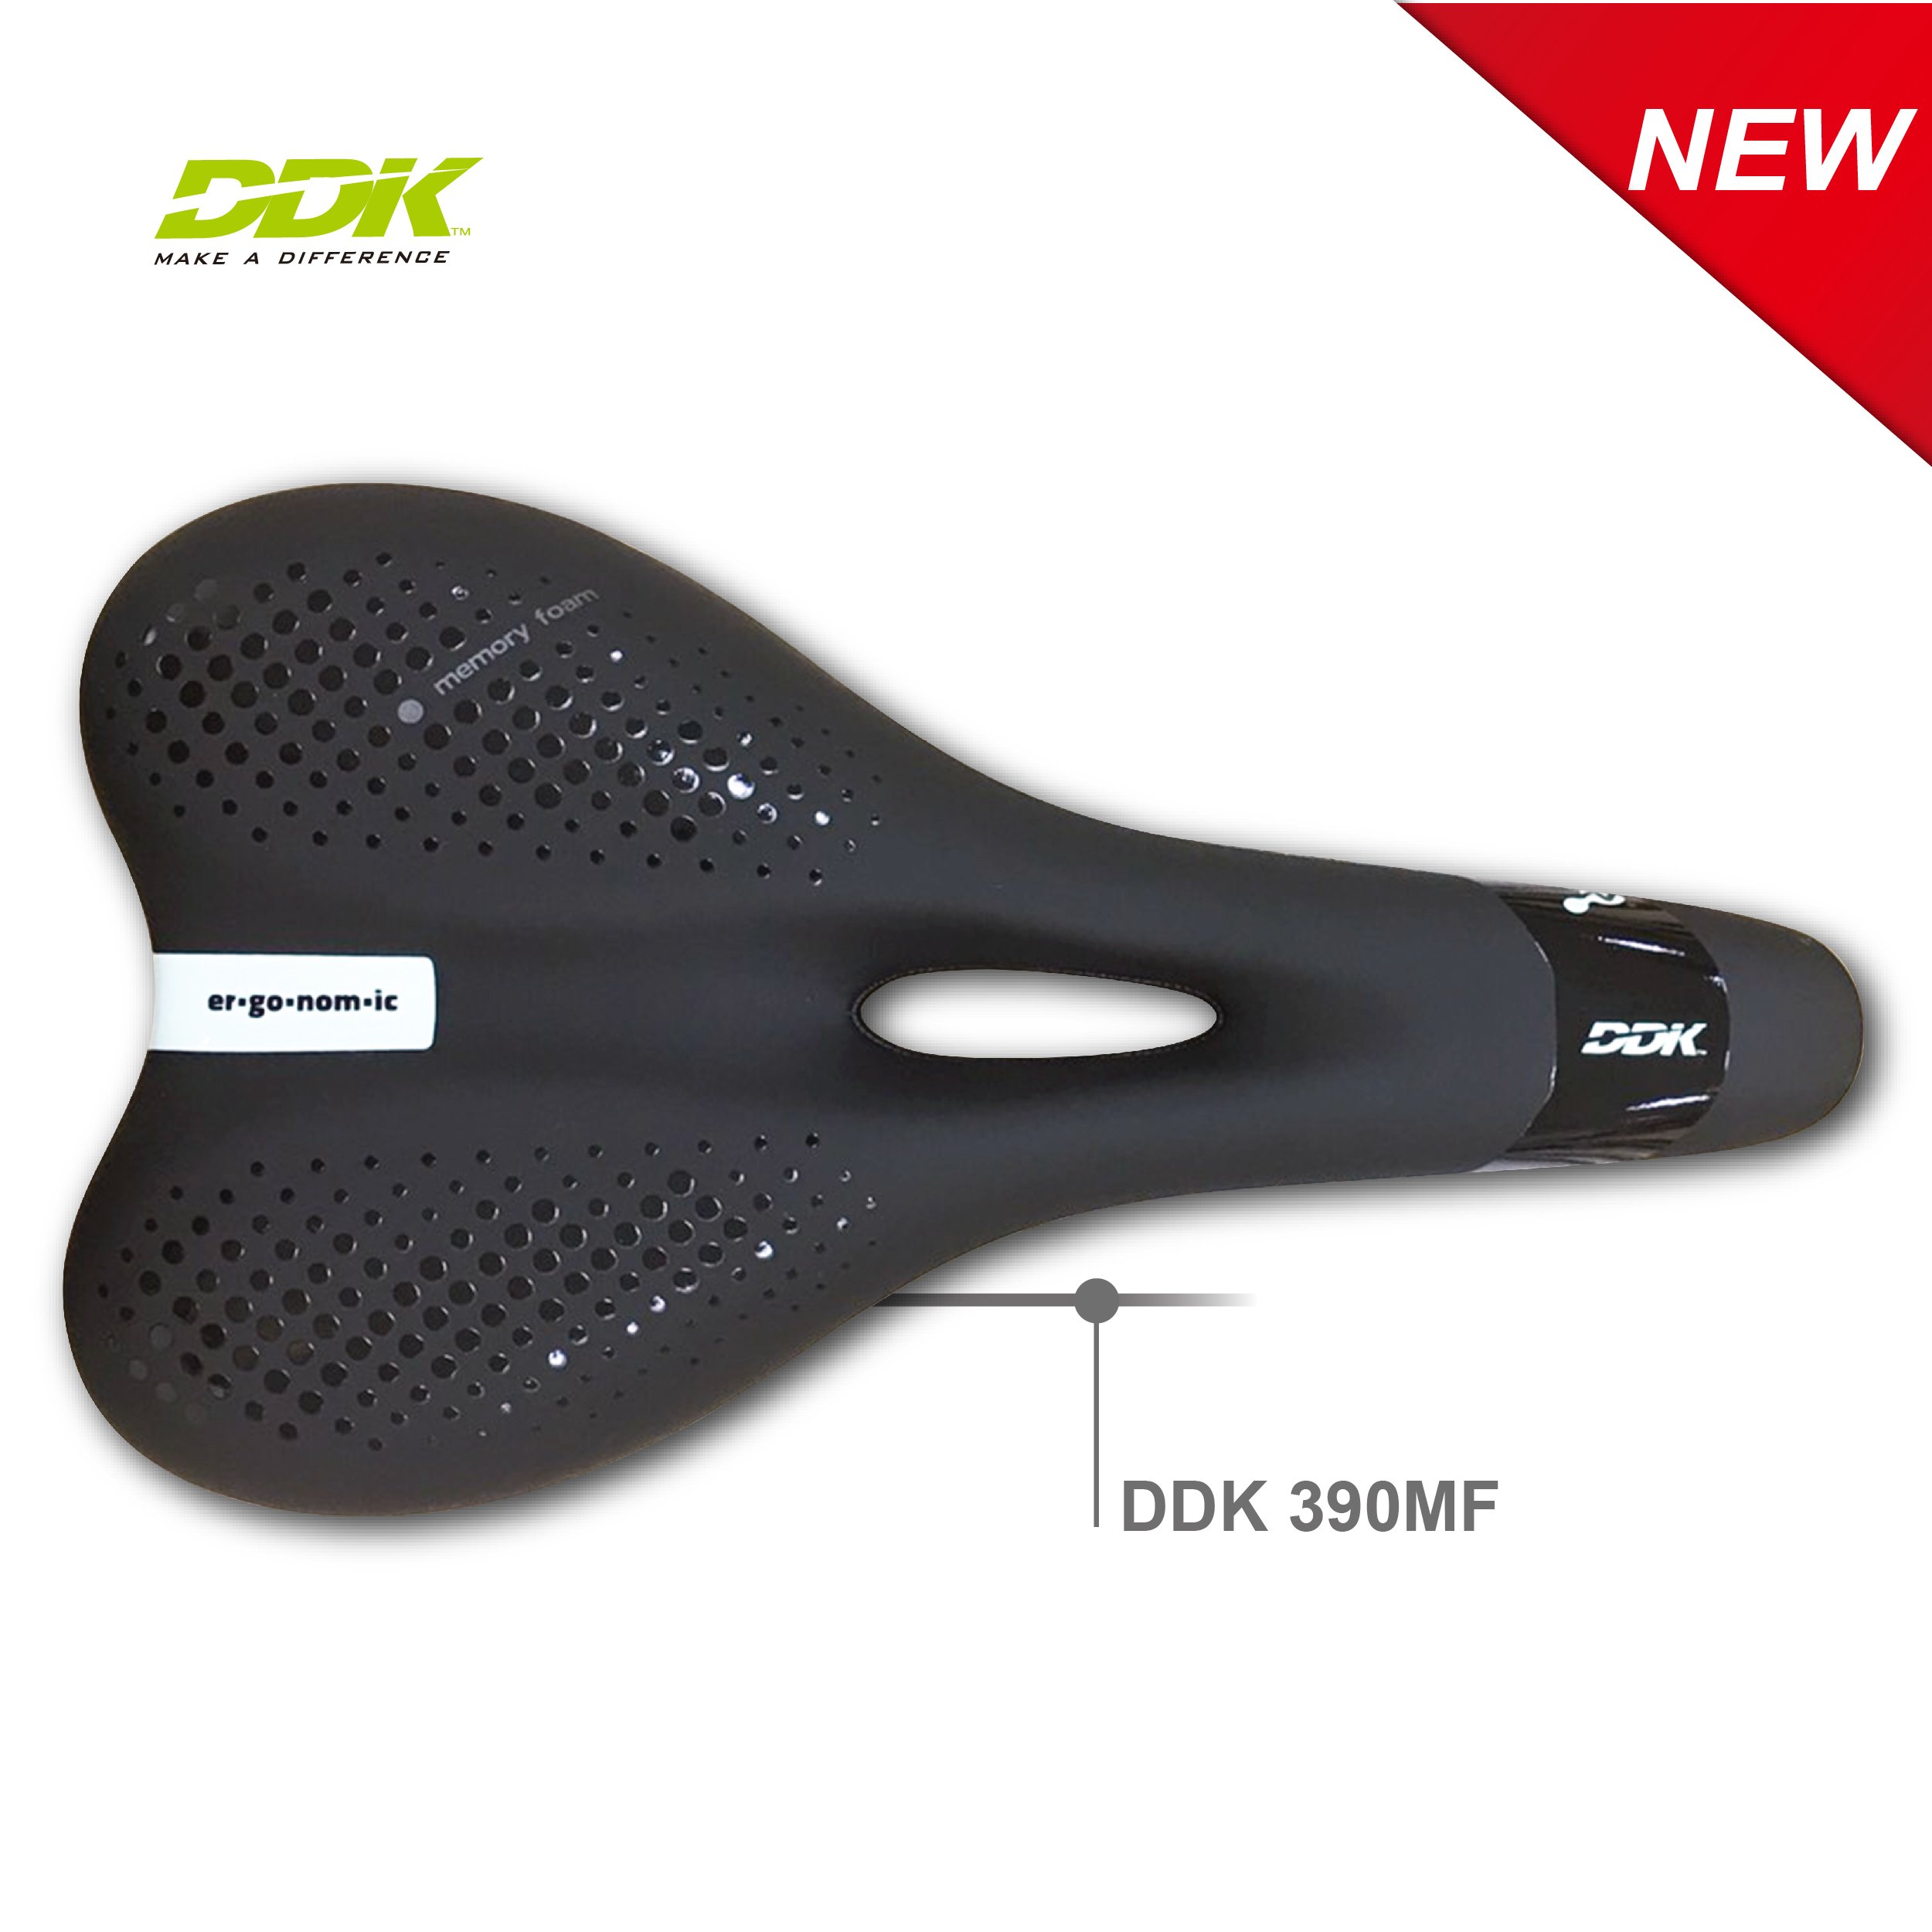 DDK-390MF